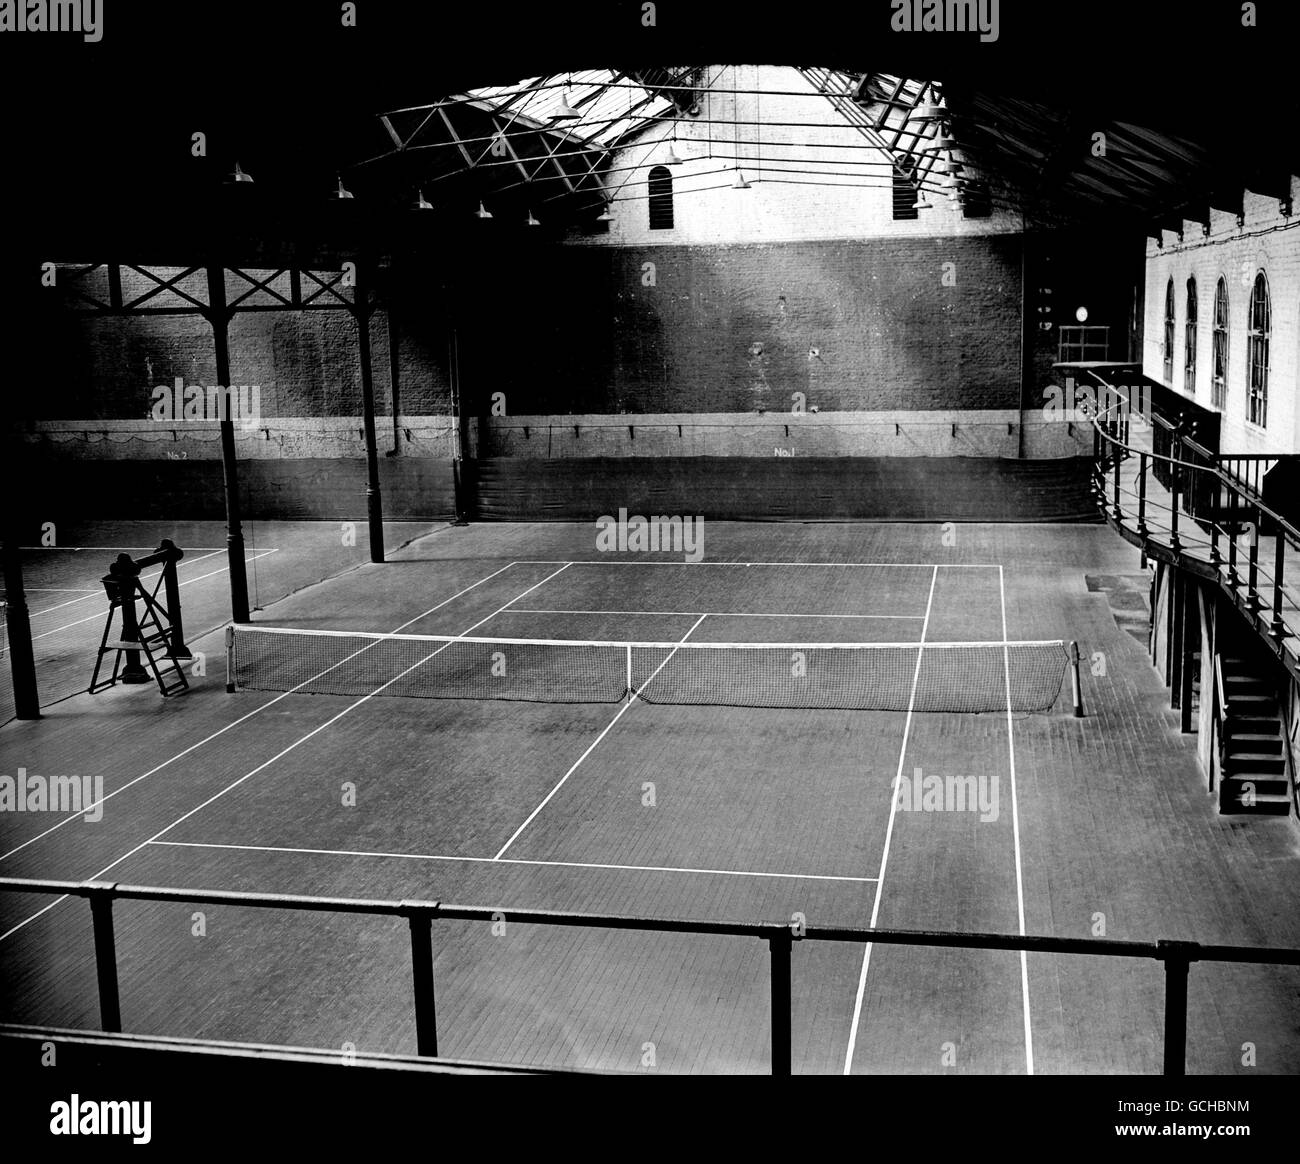 Tenis - La serie 'Queen' - Club de la Reina. Vista general de la pista de tenis cubierta Foto de stock